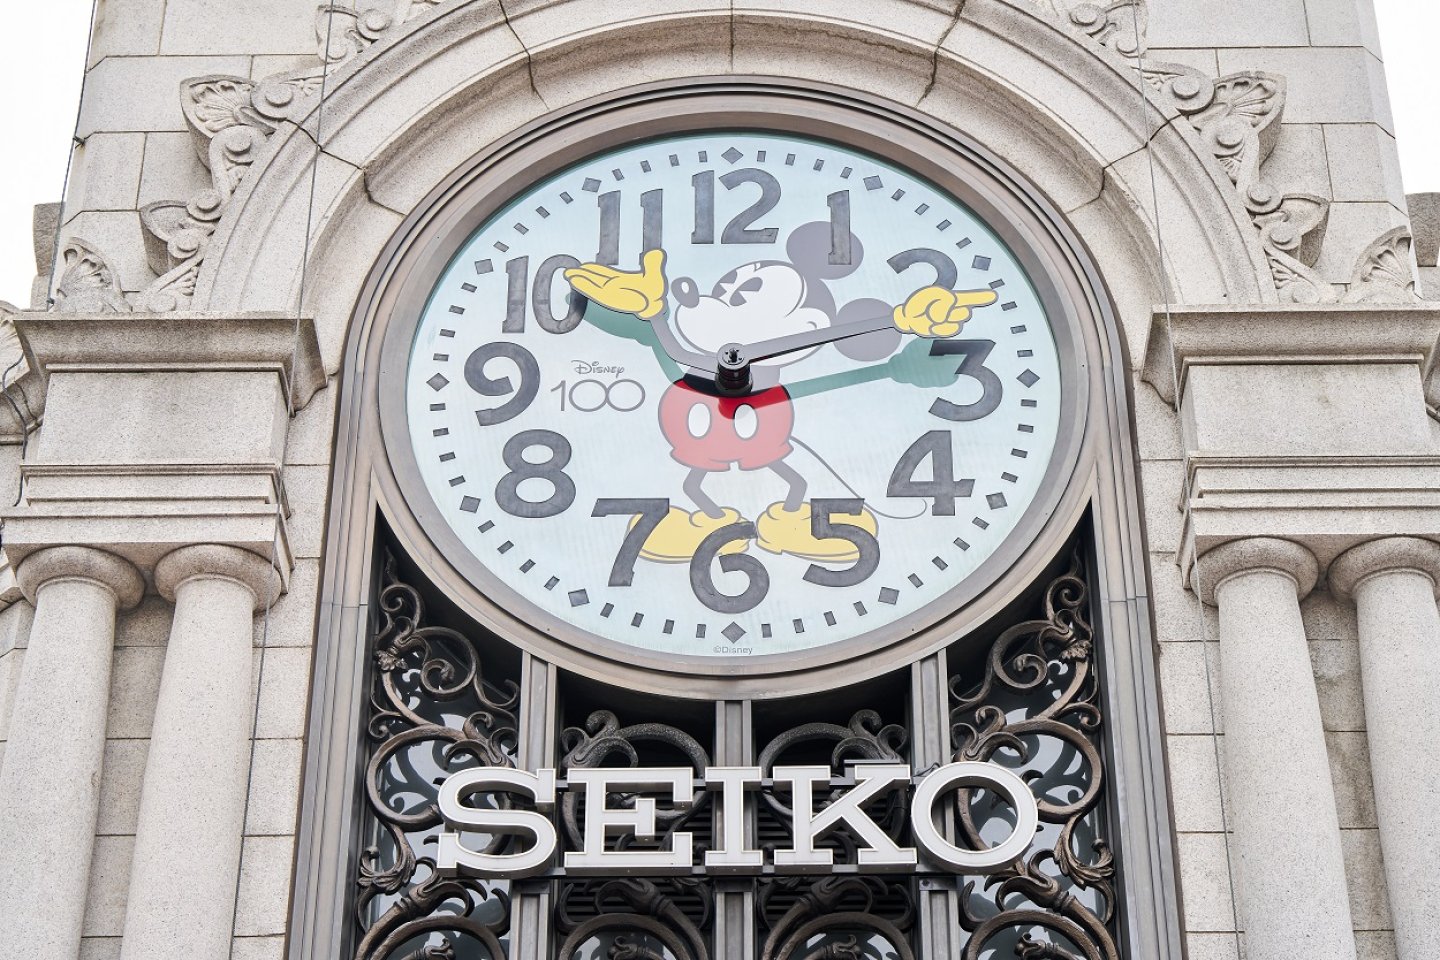 SEIKO HOUSE GINZAのショーウインドウにミッキーマウスをデザインした大時計を10月5日からディスプレイ～ミッキーマウスがテーマの時計塔はパープルにライトアップ